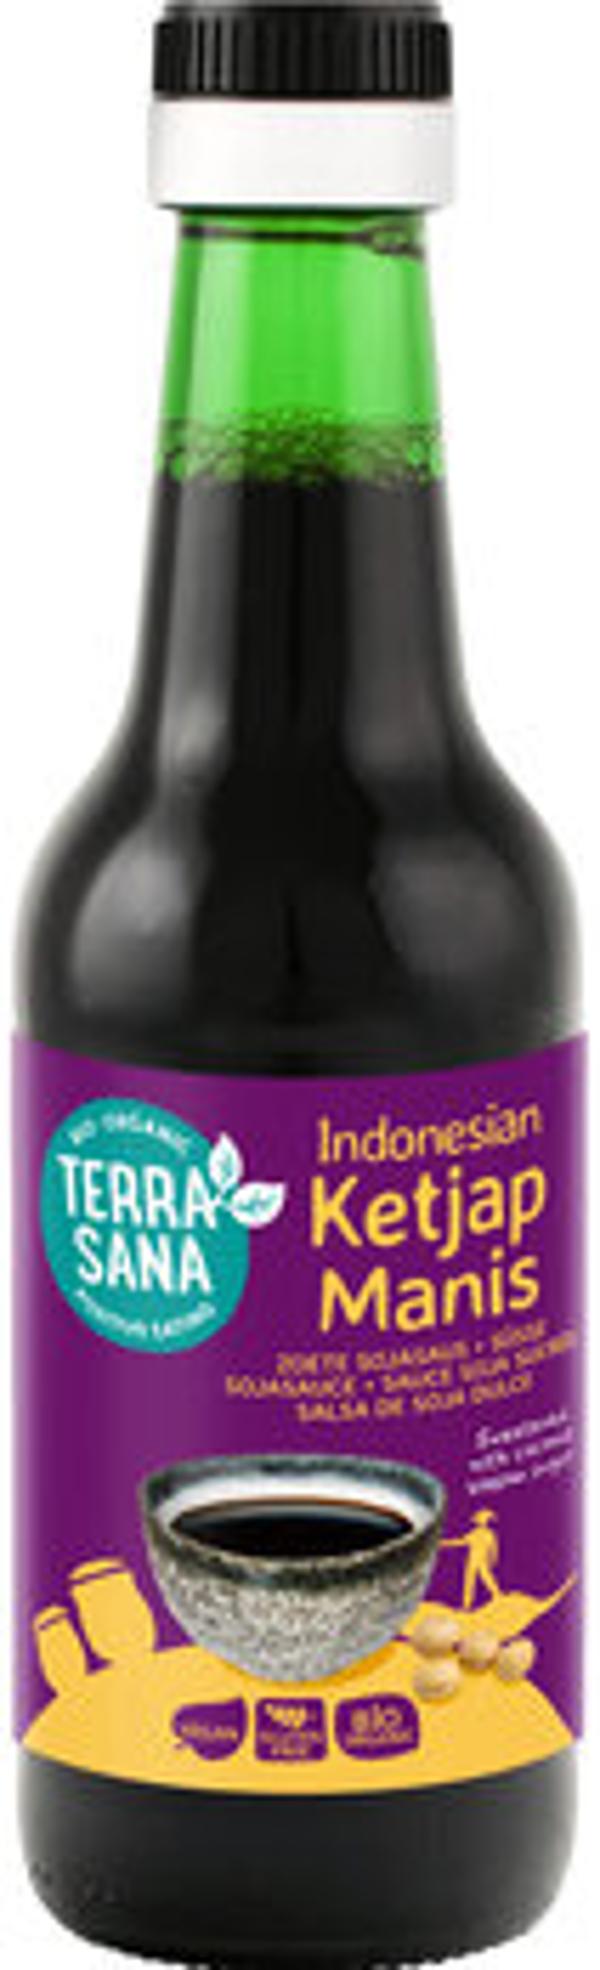 Produktfoto zu Indonesian Ketjap Manis Sojasauce